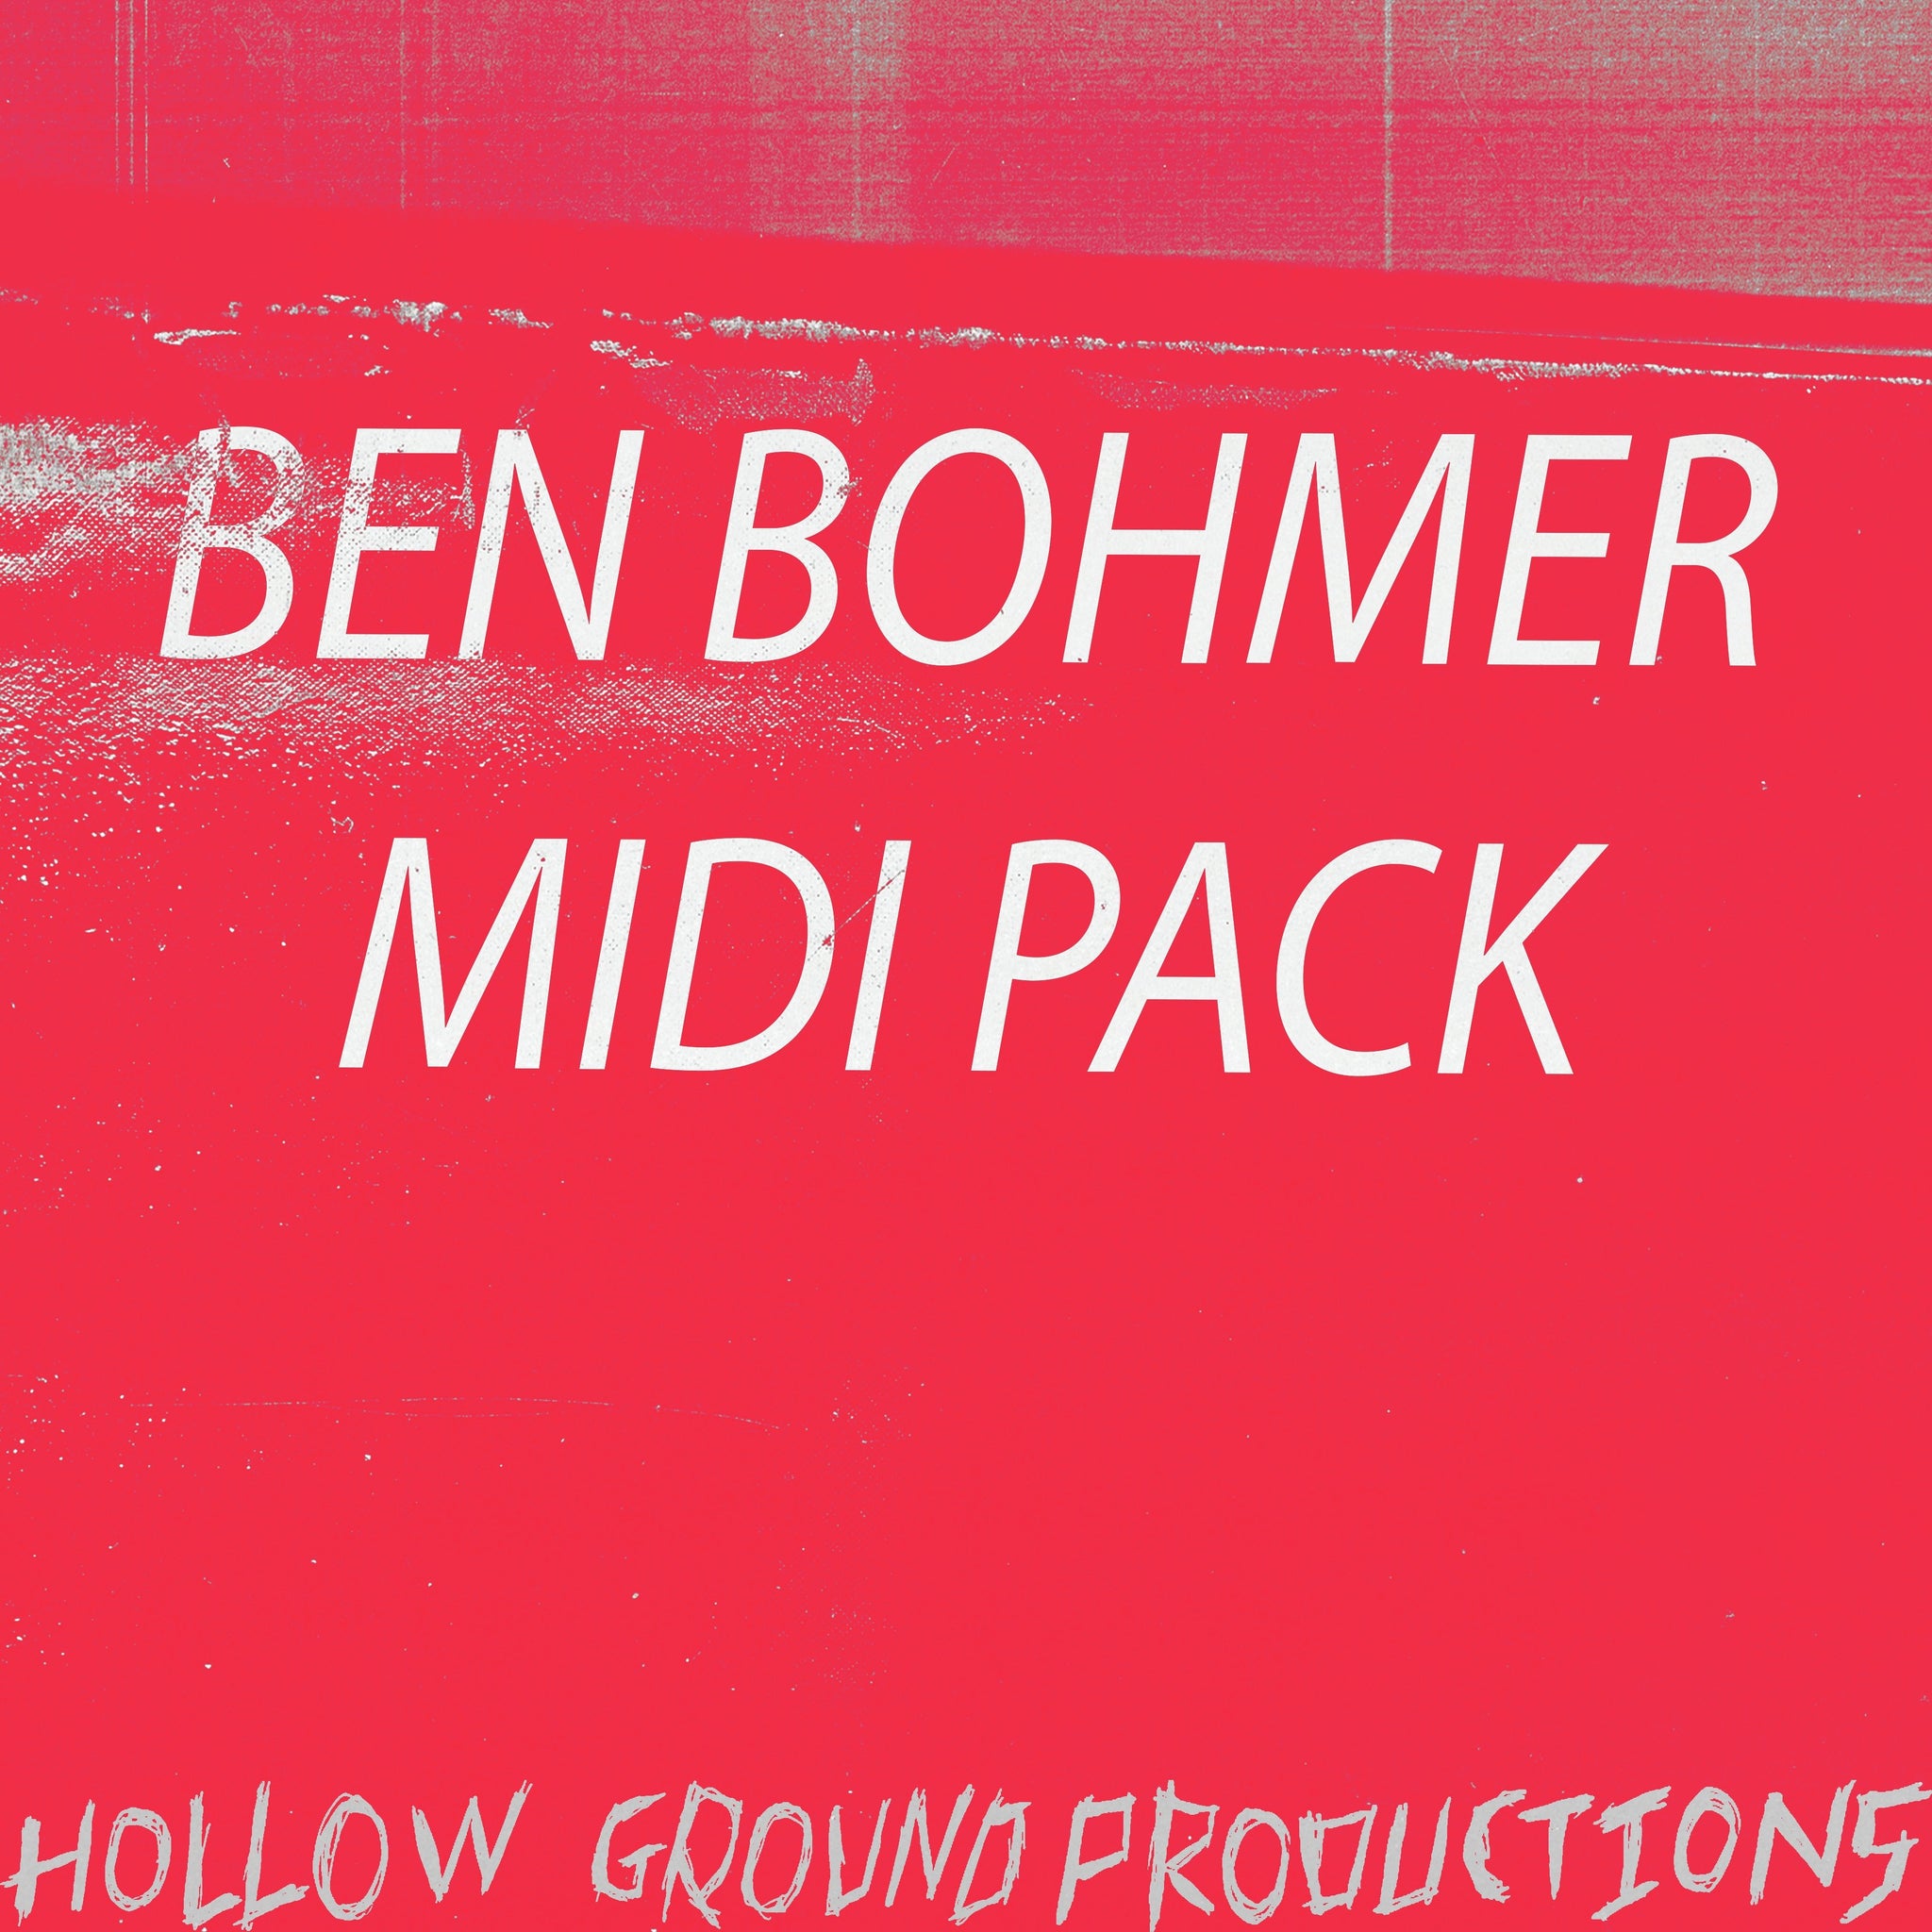 Beyond Borders - Hollow Ground Productions (Wukah) - Scraps Audio